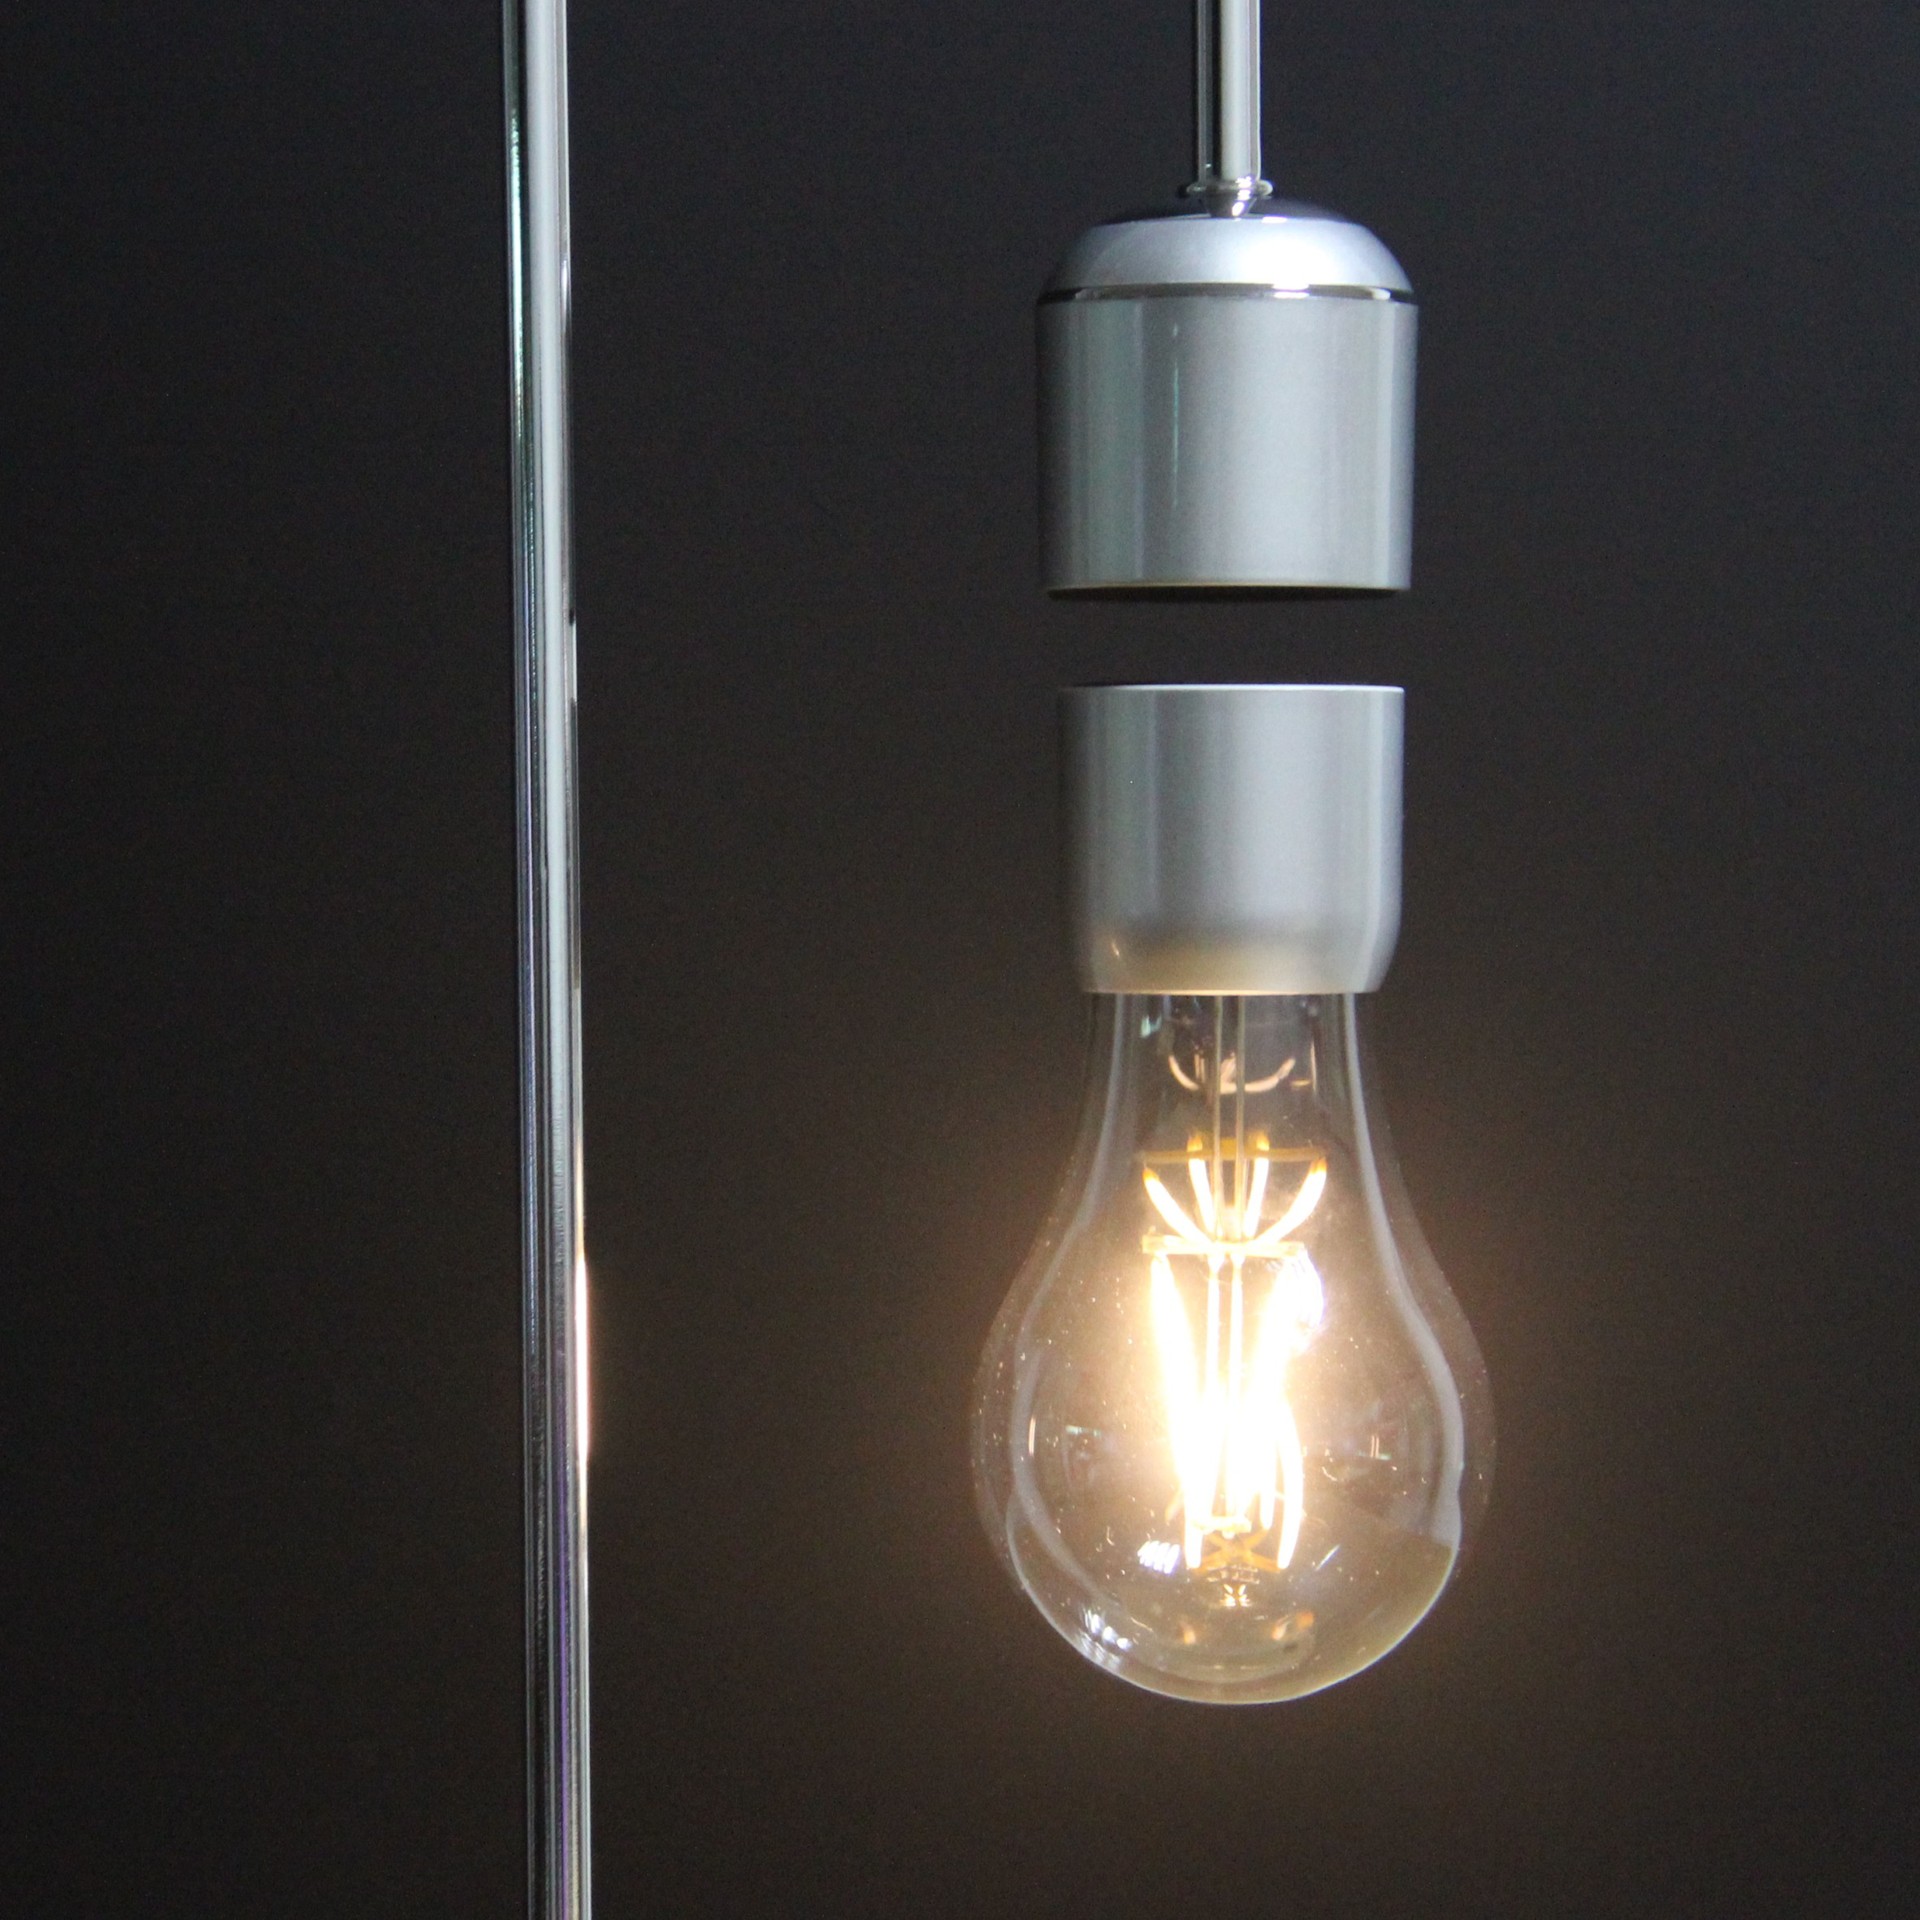 Magnetic-Levitation-LED-Light-Bulb-Wireless-Charging-LED-Night-Light-Desk-Lamps-Bulb-For-Home-Decora-1926813-3